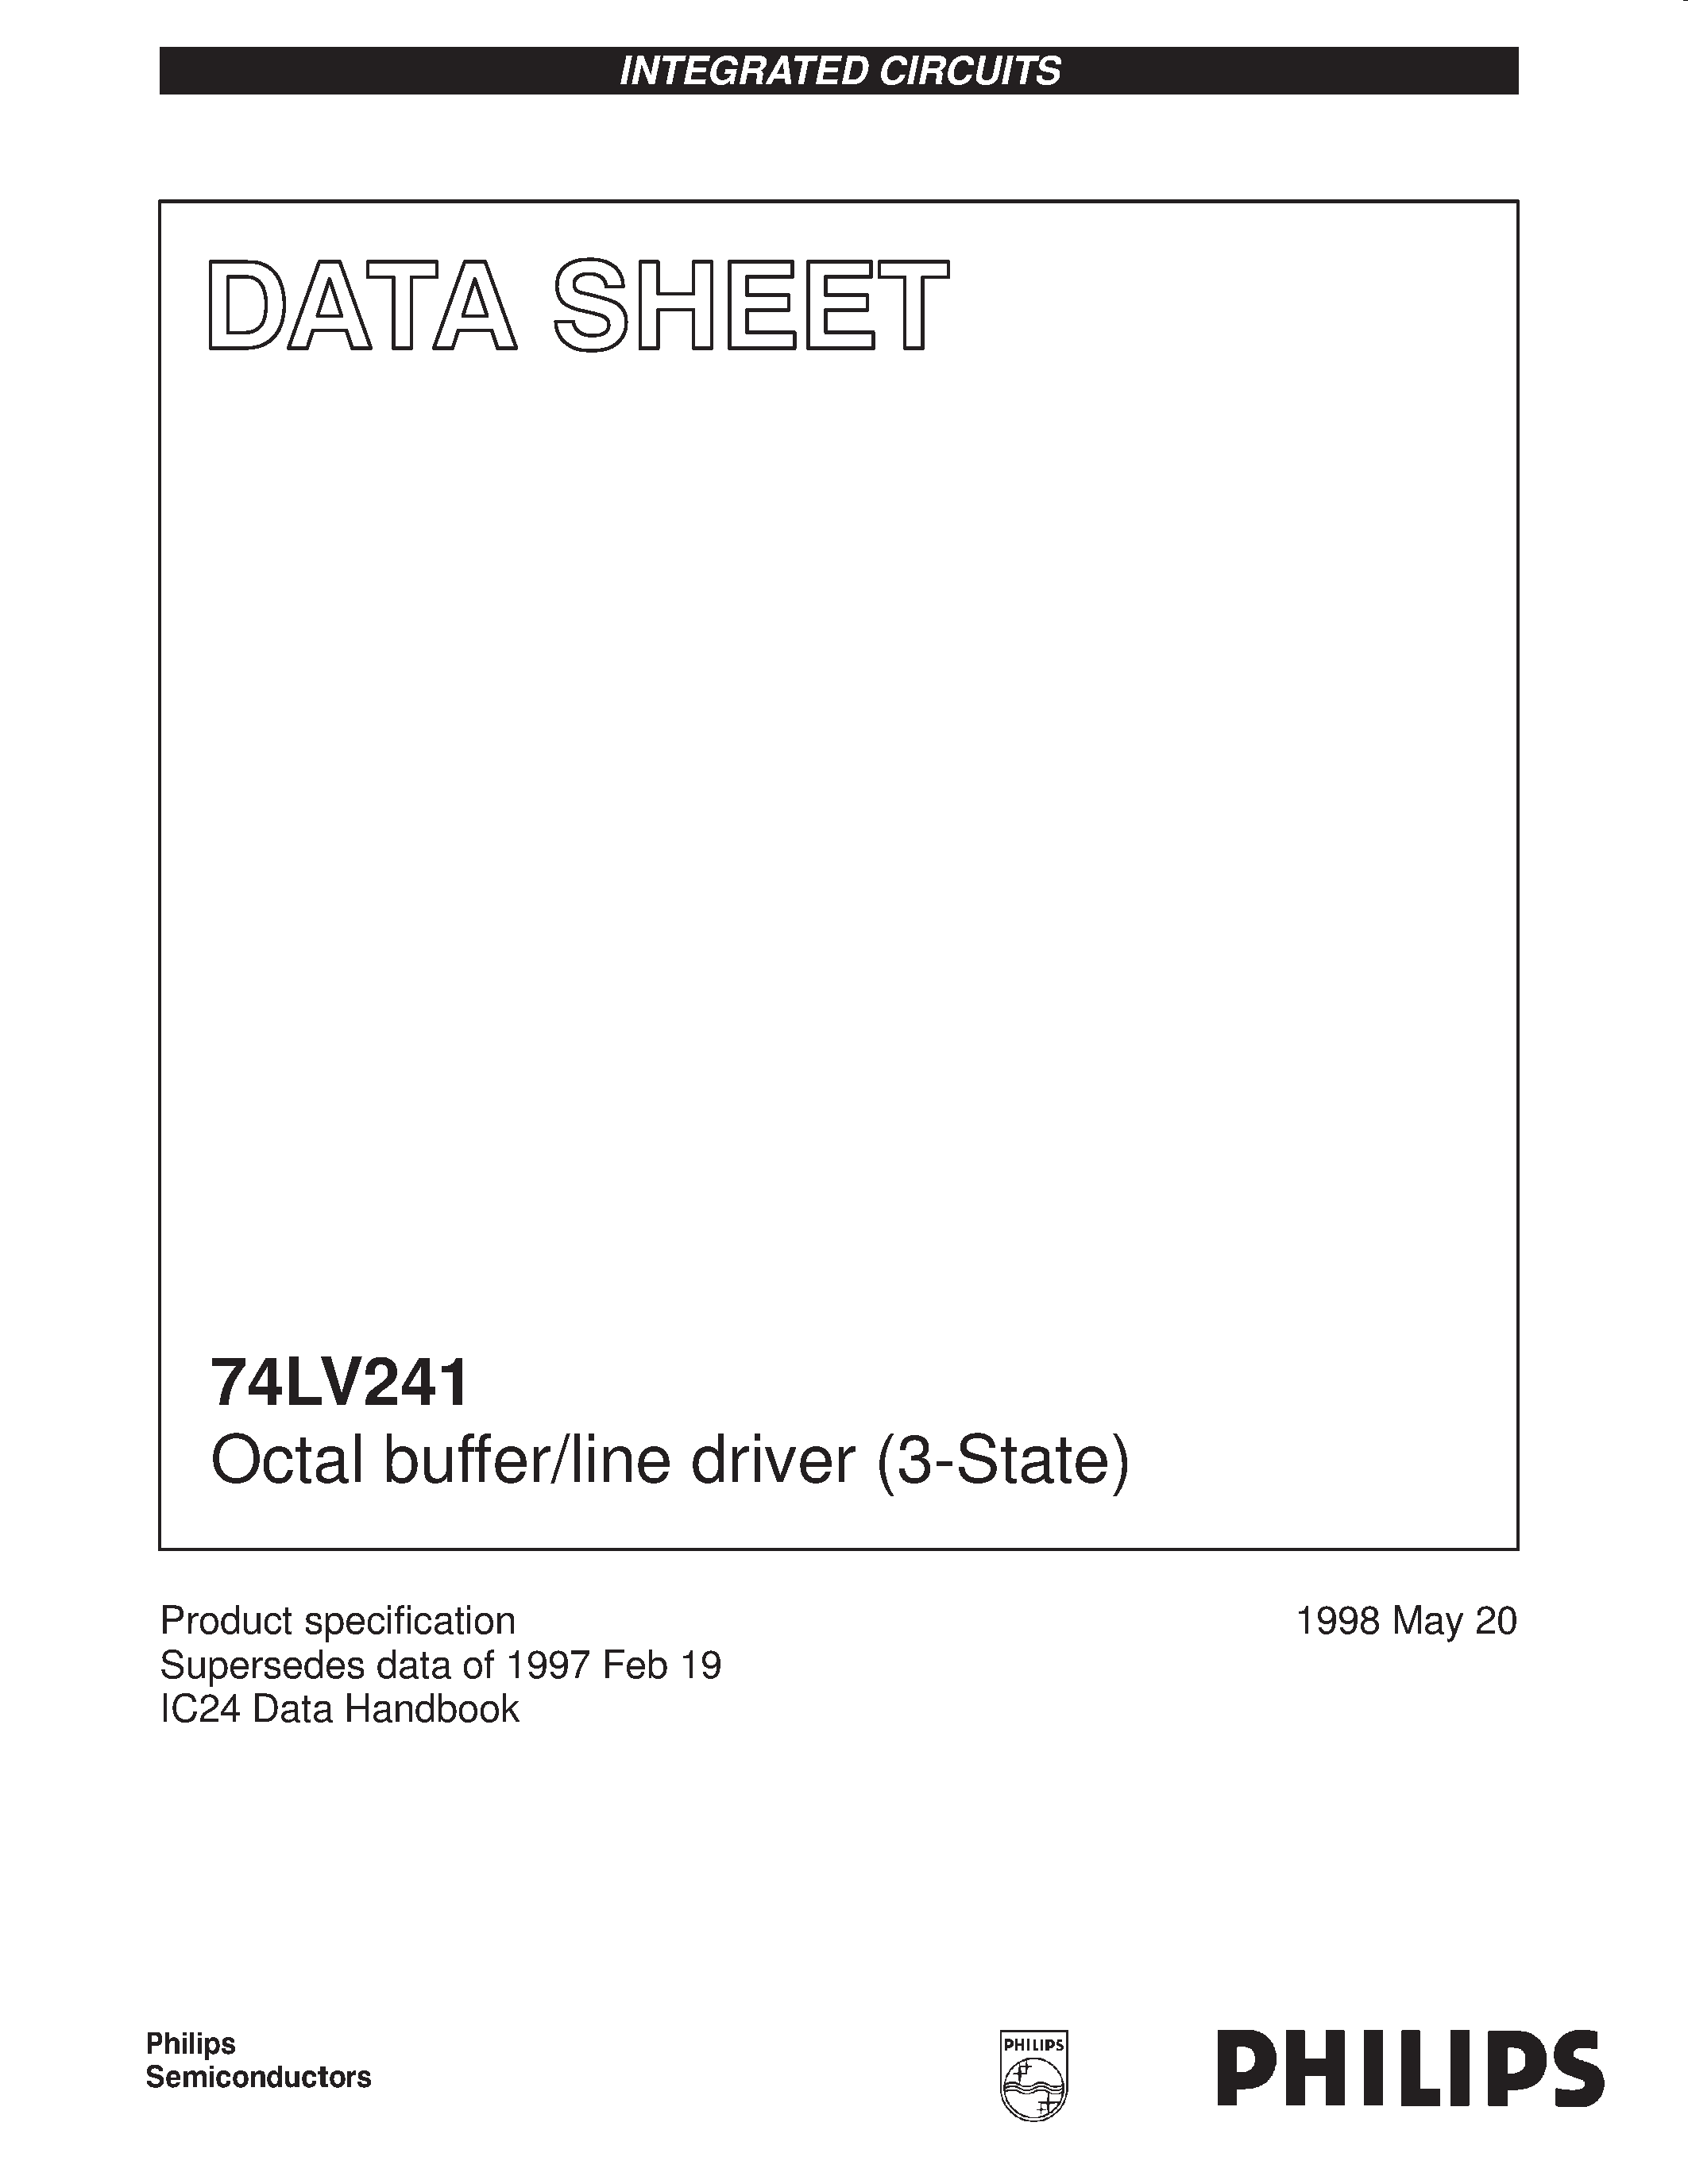 Даташит 74LV241 - Octal buffer/line driver 3-State страница 1